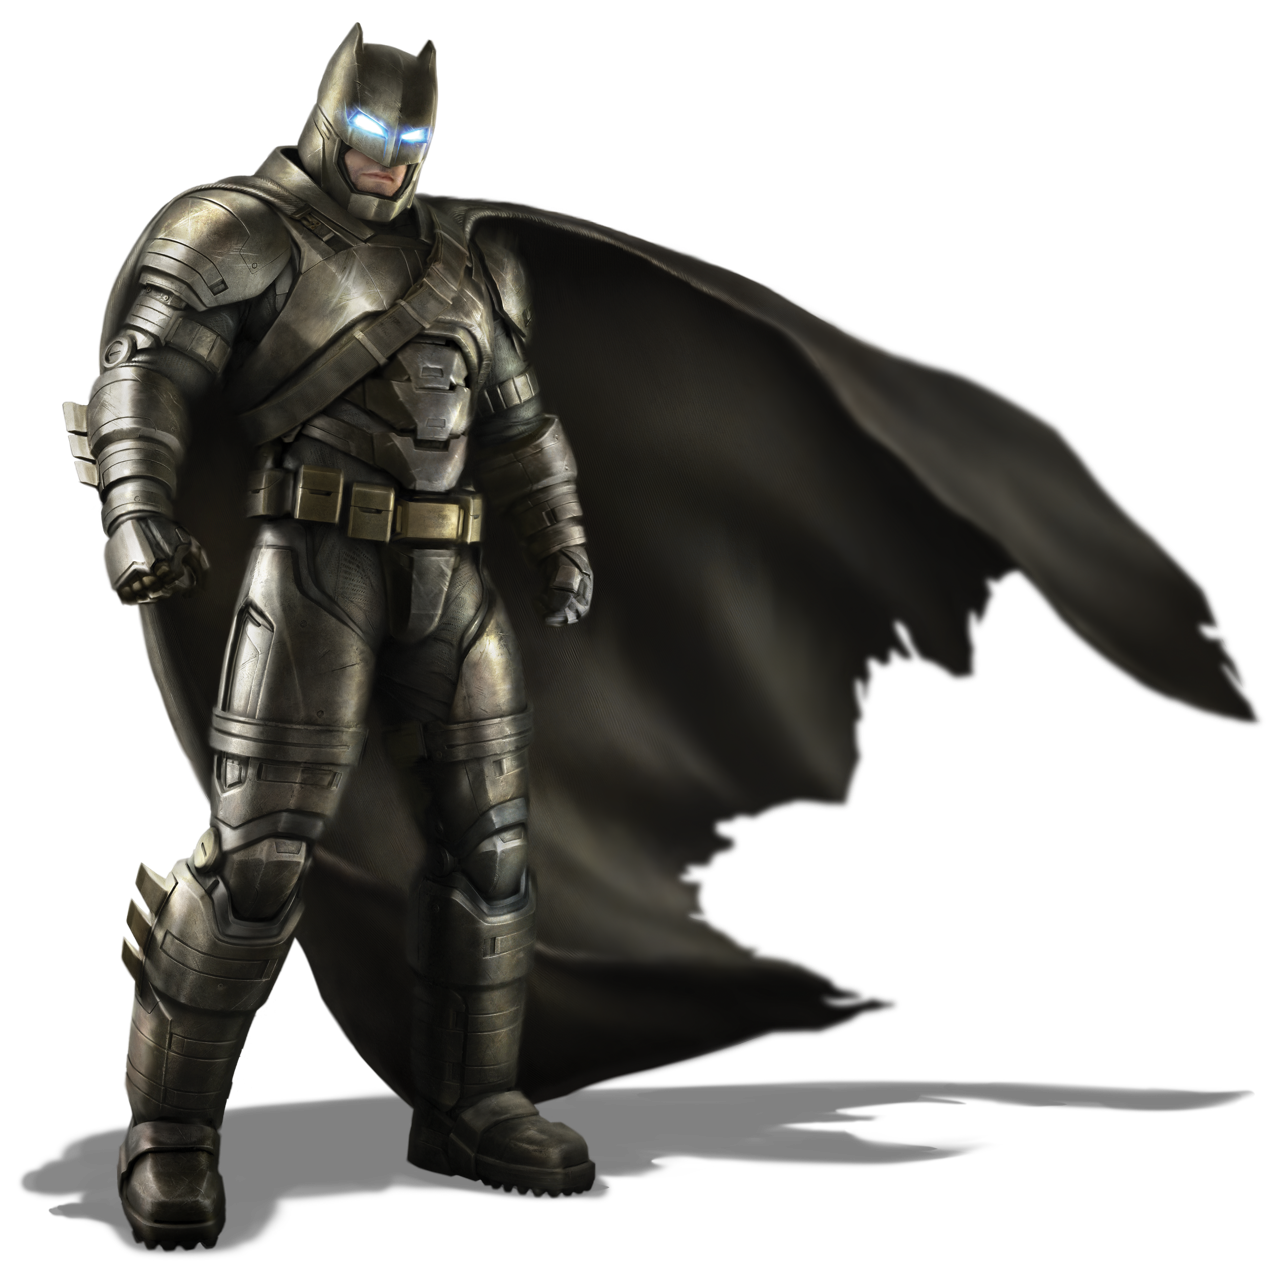 Download PNG image - Batman Vs Superman PNG Pic 